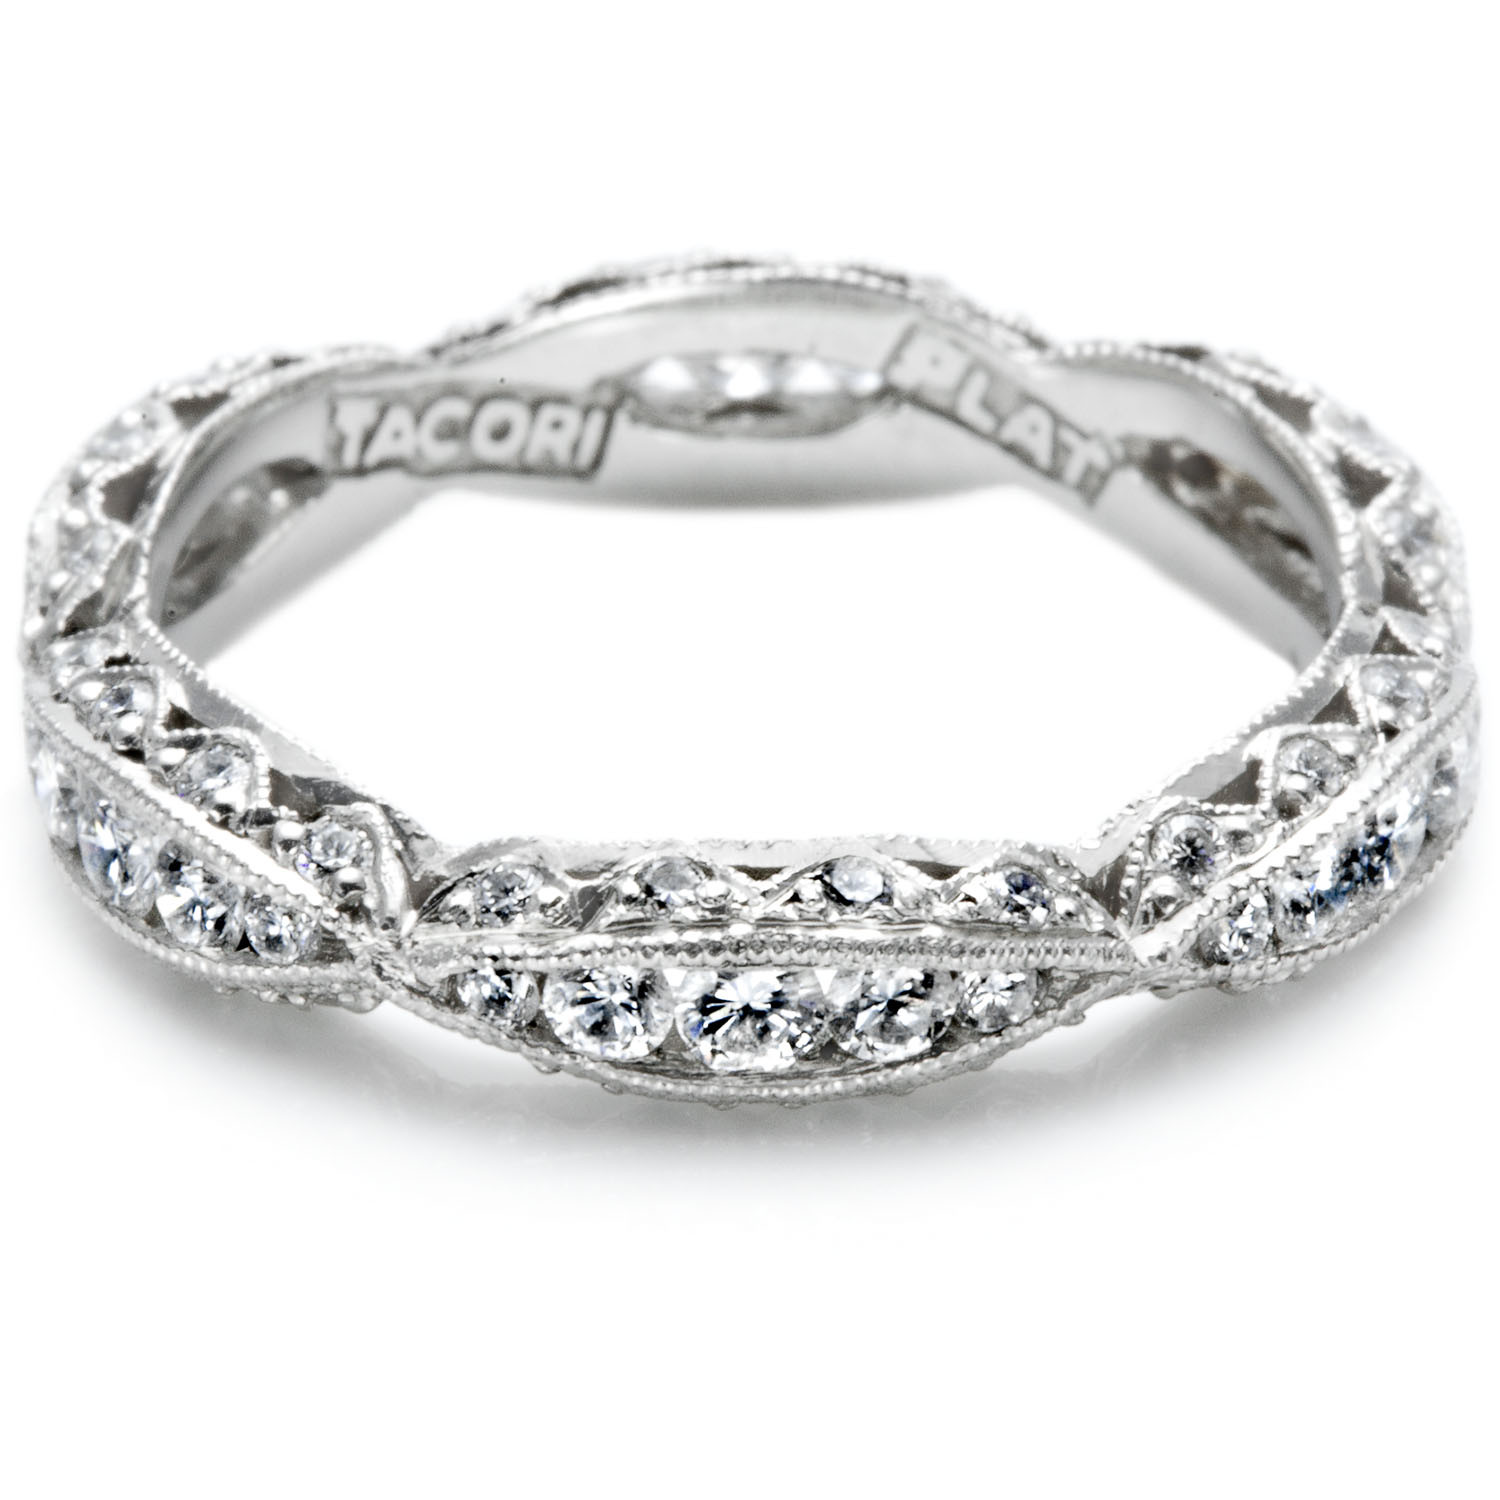 Tacori Wedding Rings
 Solomon Brothers Fine Jewelry